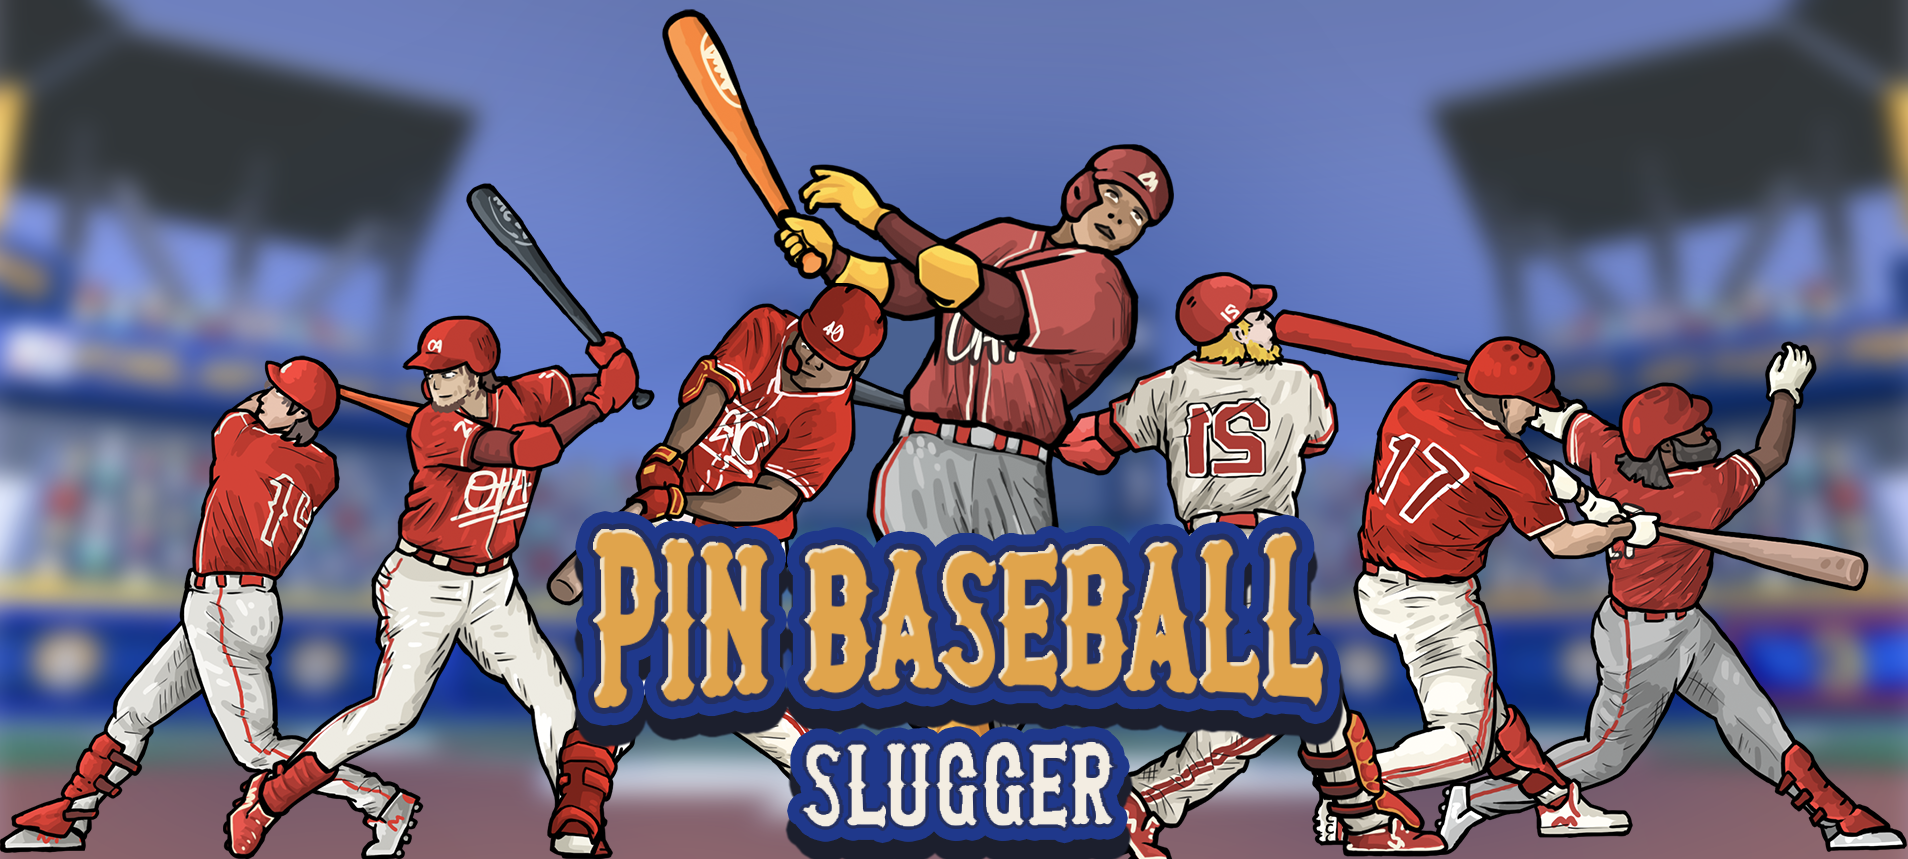 Pin baseball games - slugger screenshot game